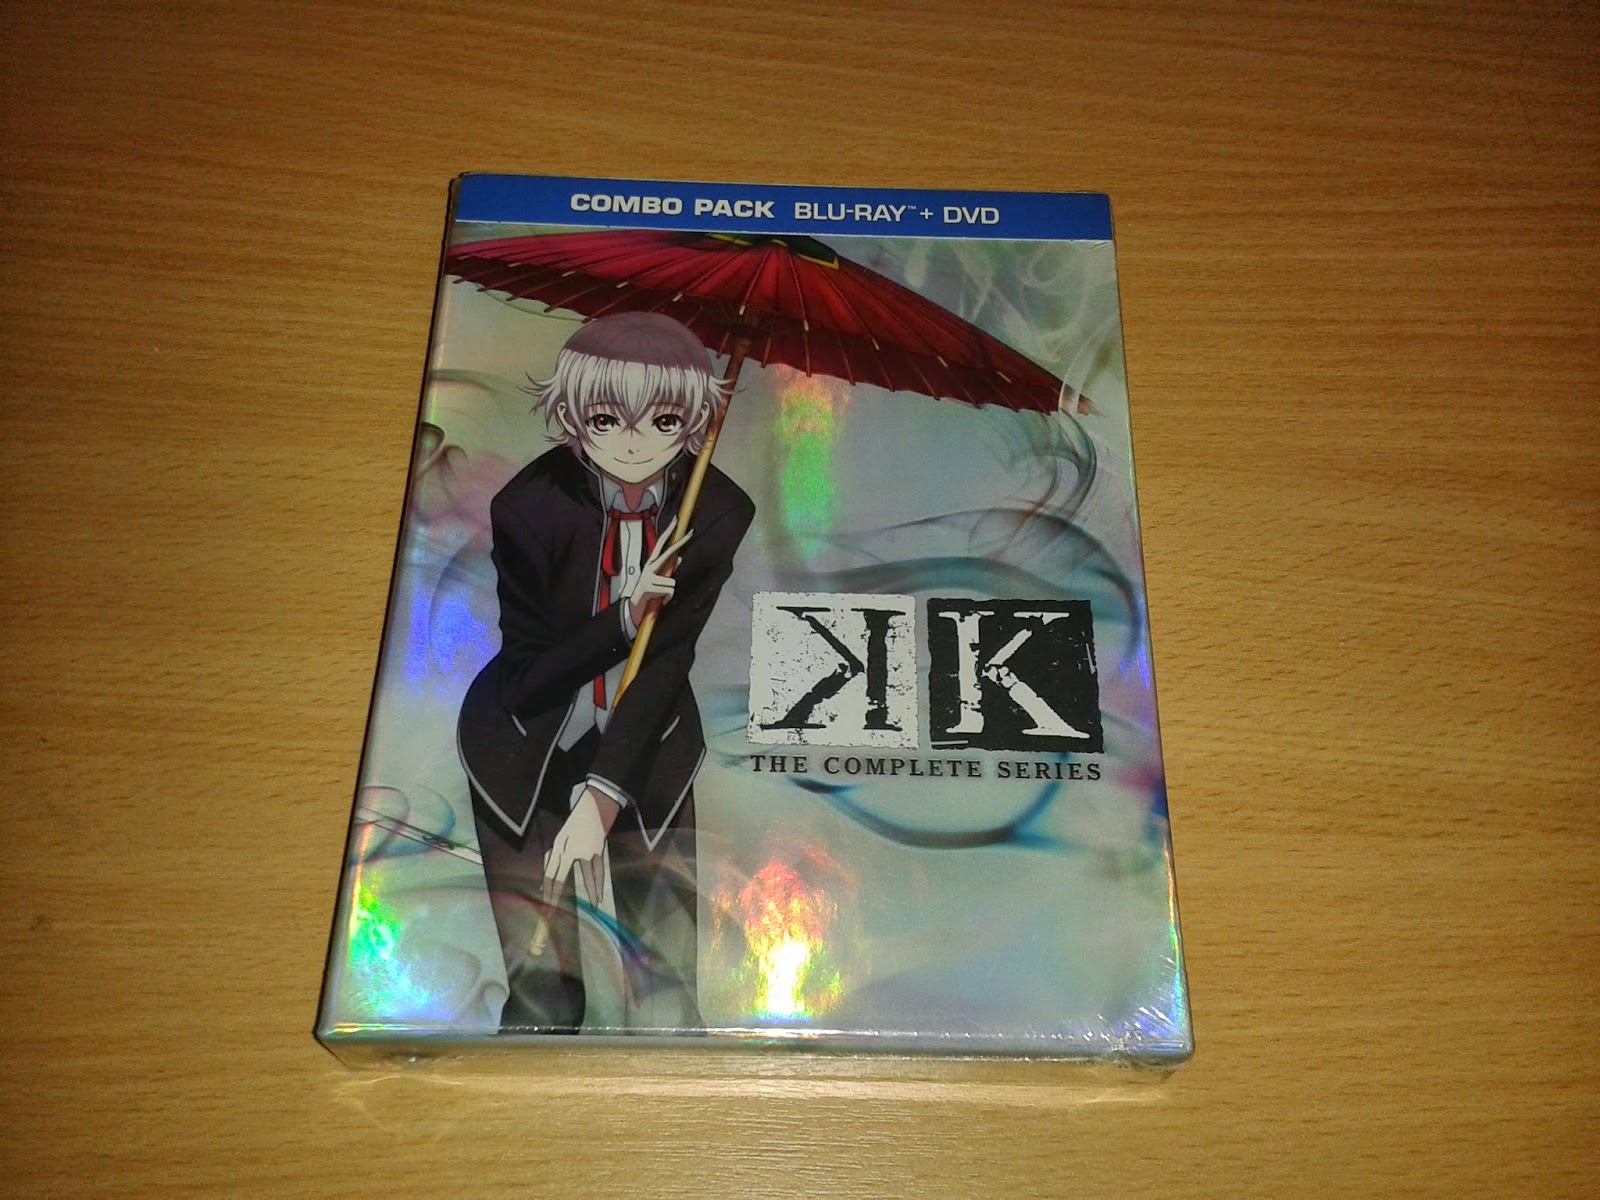 Dvd Anime K-on Série Completa + Filme